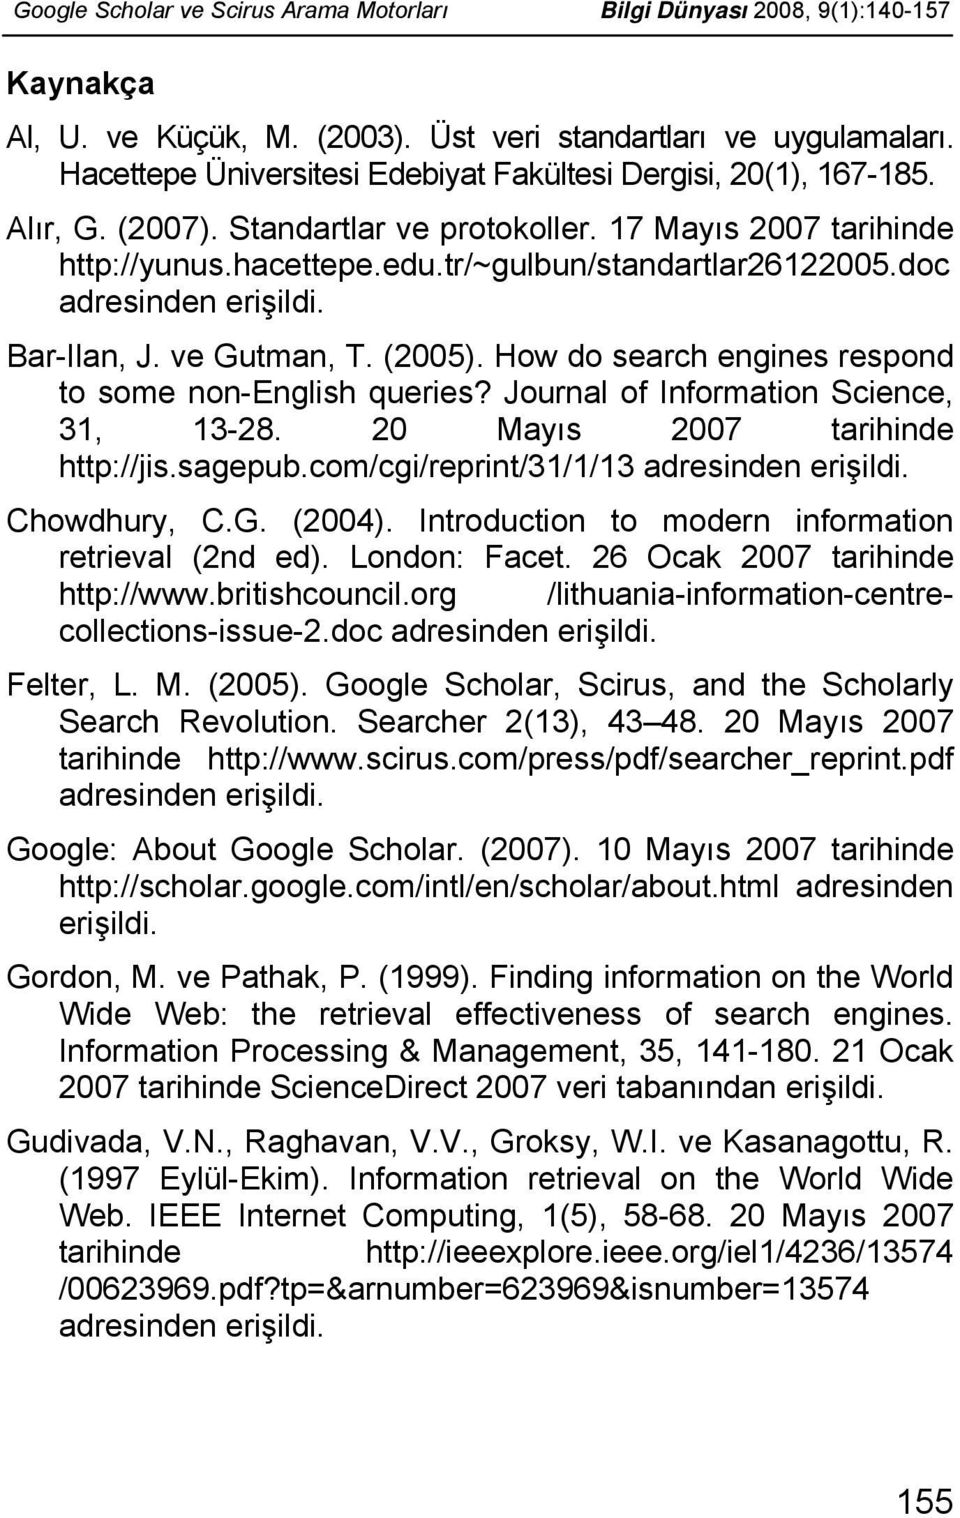 doc adresinden erişildi. Bar-Ilan, J. ve Gutman, T. (2005). How do search engines respond to some non-english queries? Journal of Information Science, 31, 13-28. 20 Mayıs 2007 tarihinde http://jis.